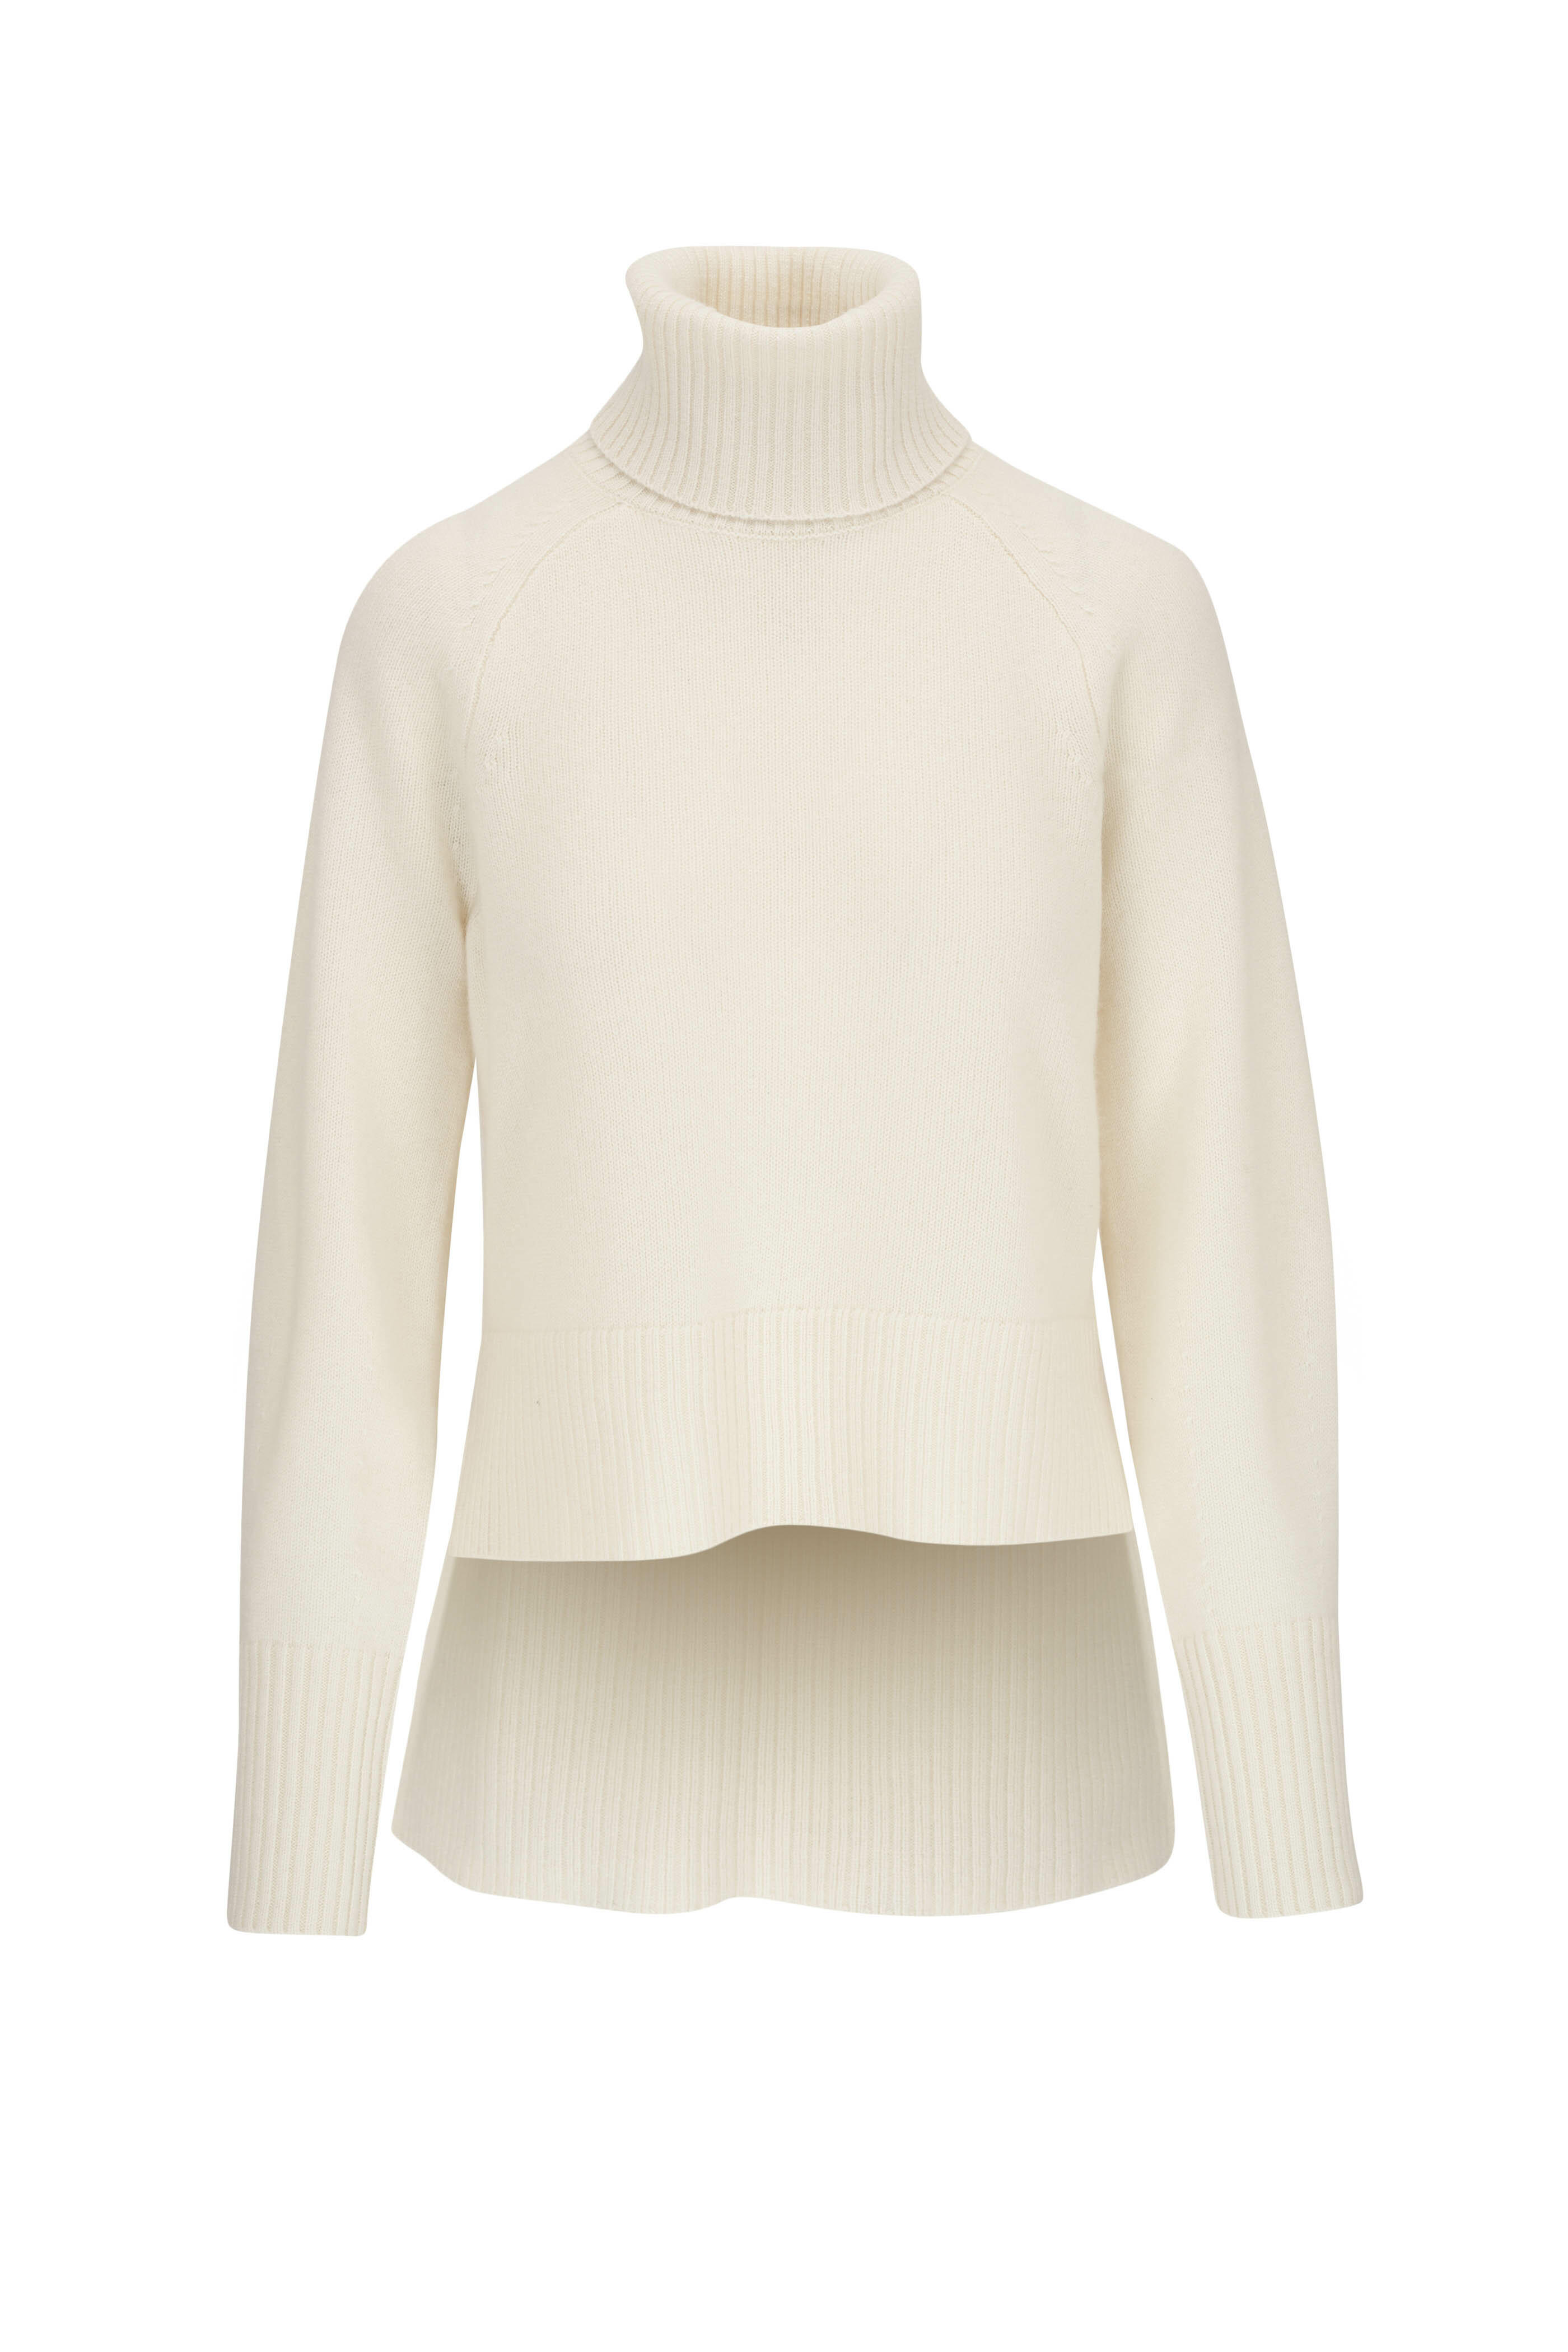 Veronica Beard - Lerato Ivory Cashmere Turtleneck Sweater